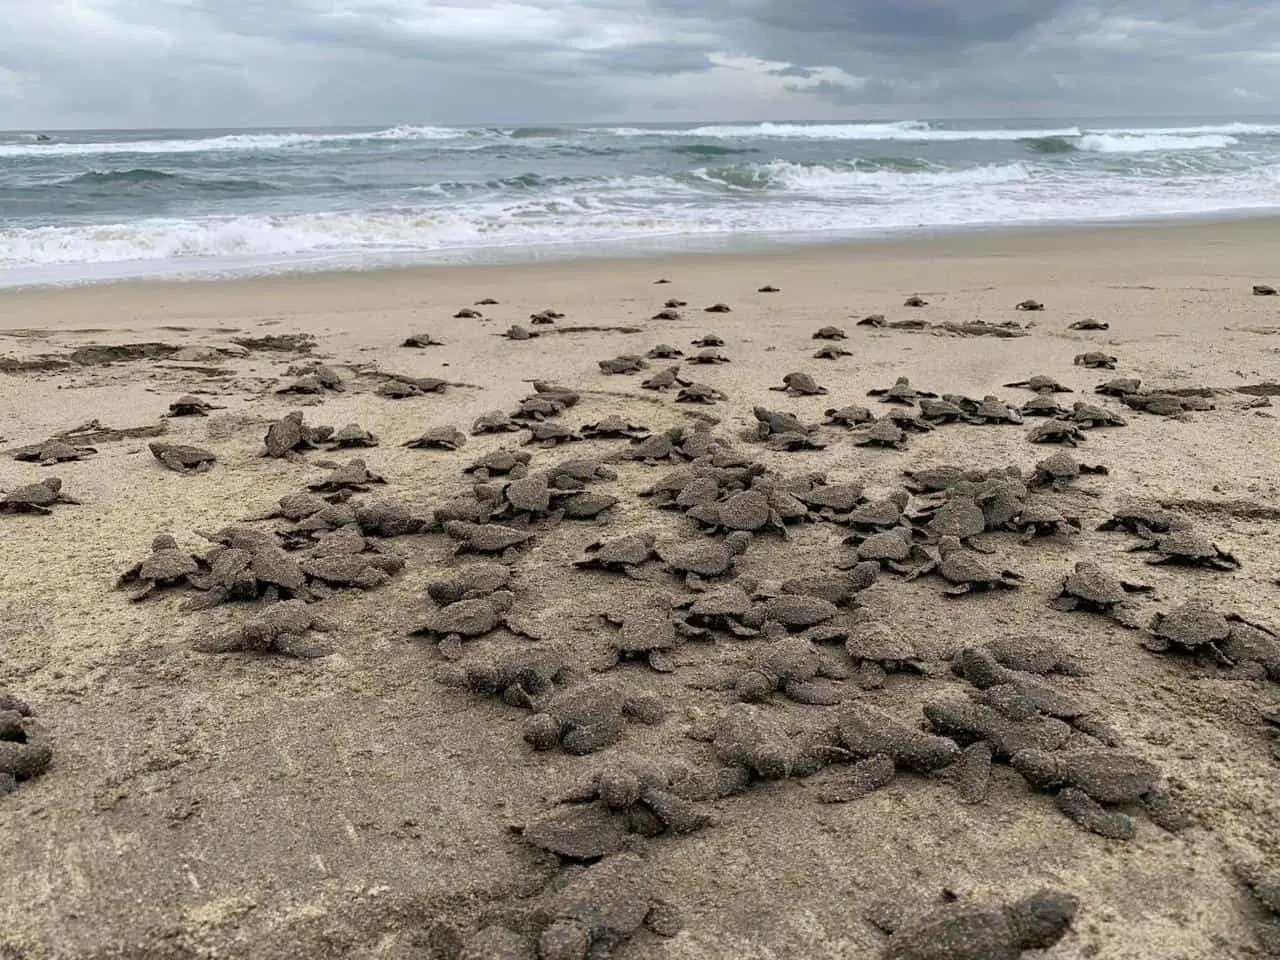 Liberan tortugas en playas de Michoacán.